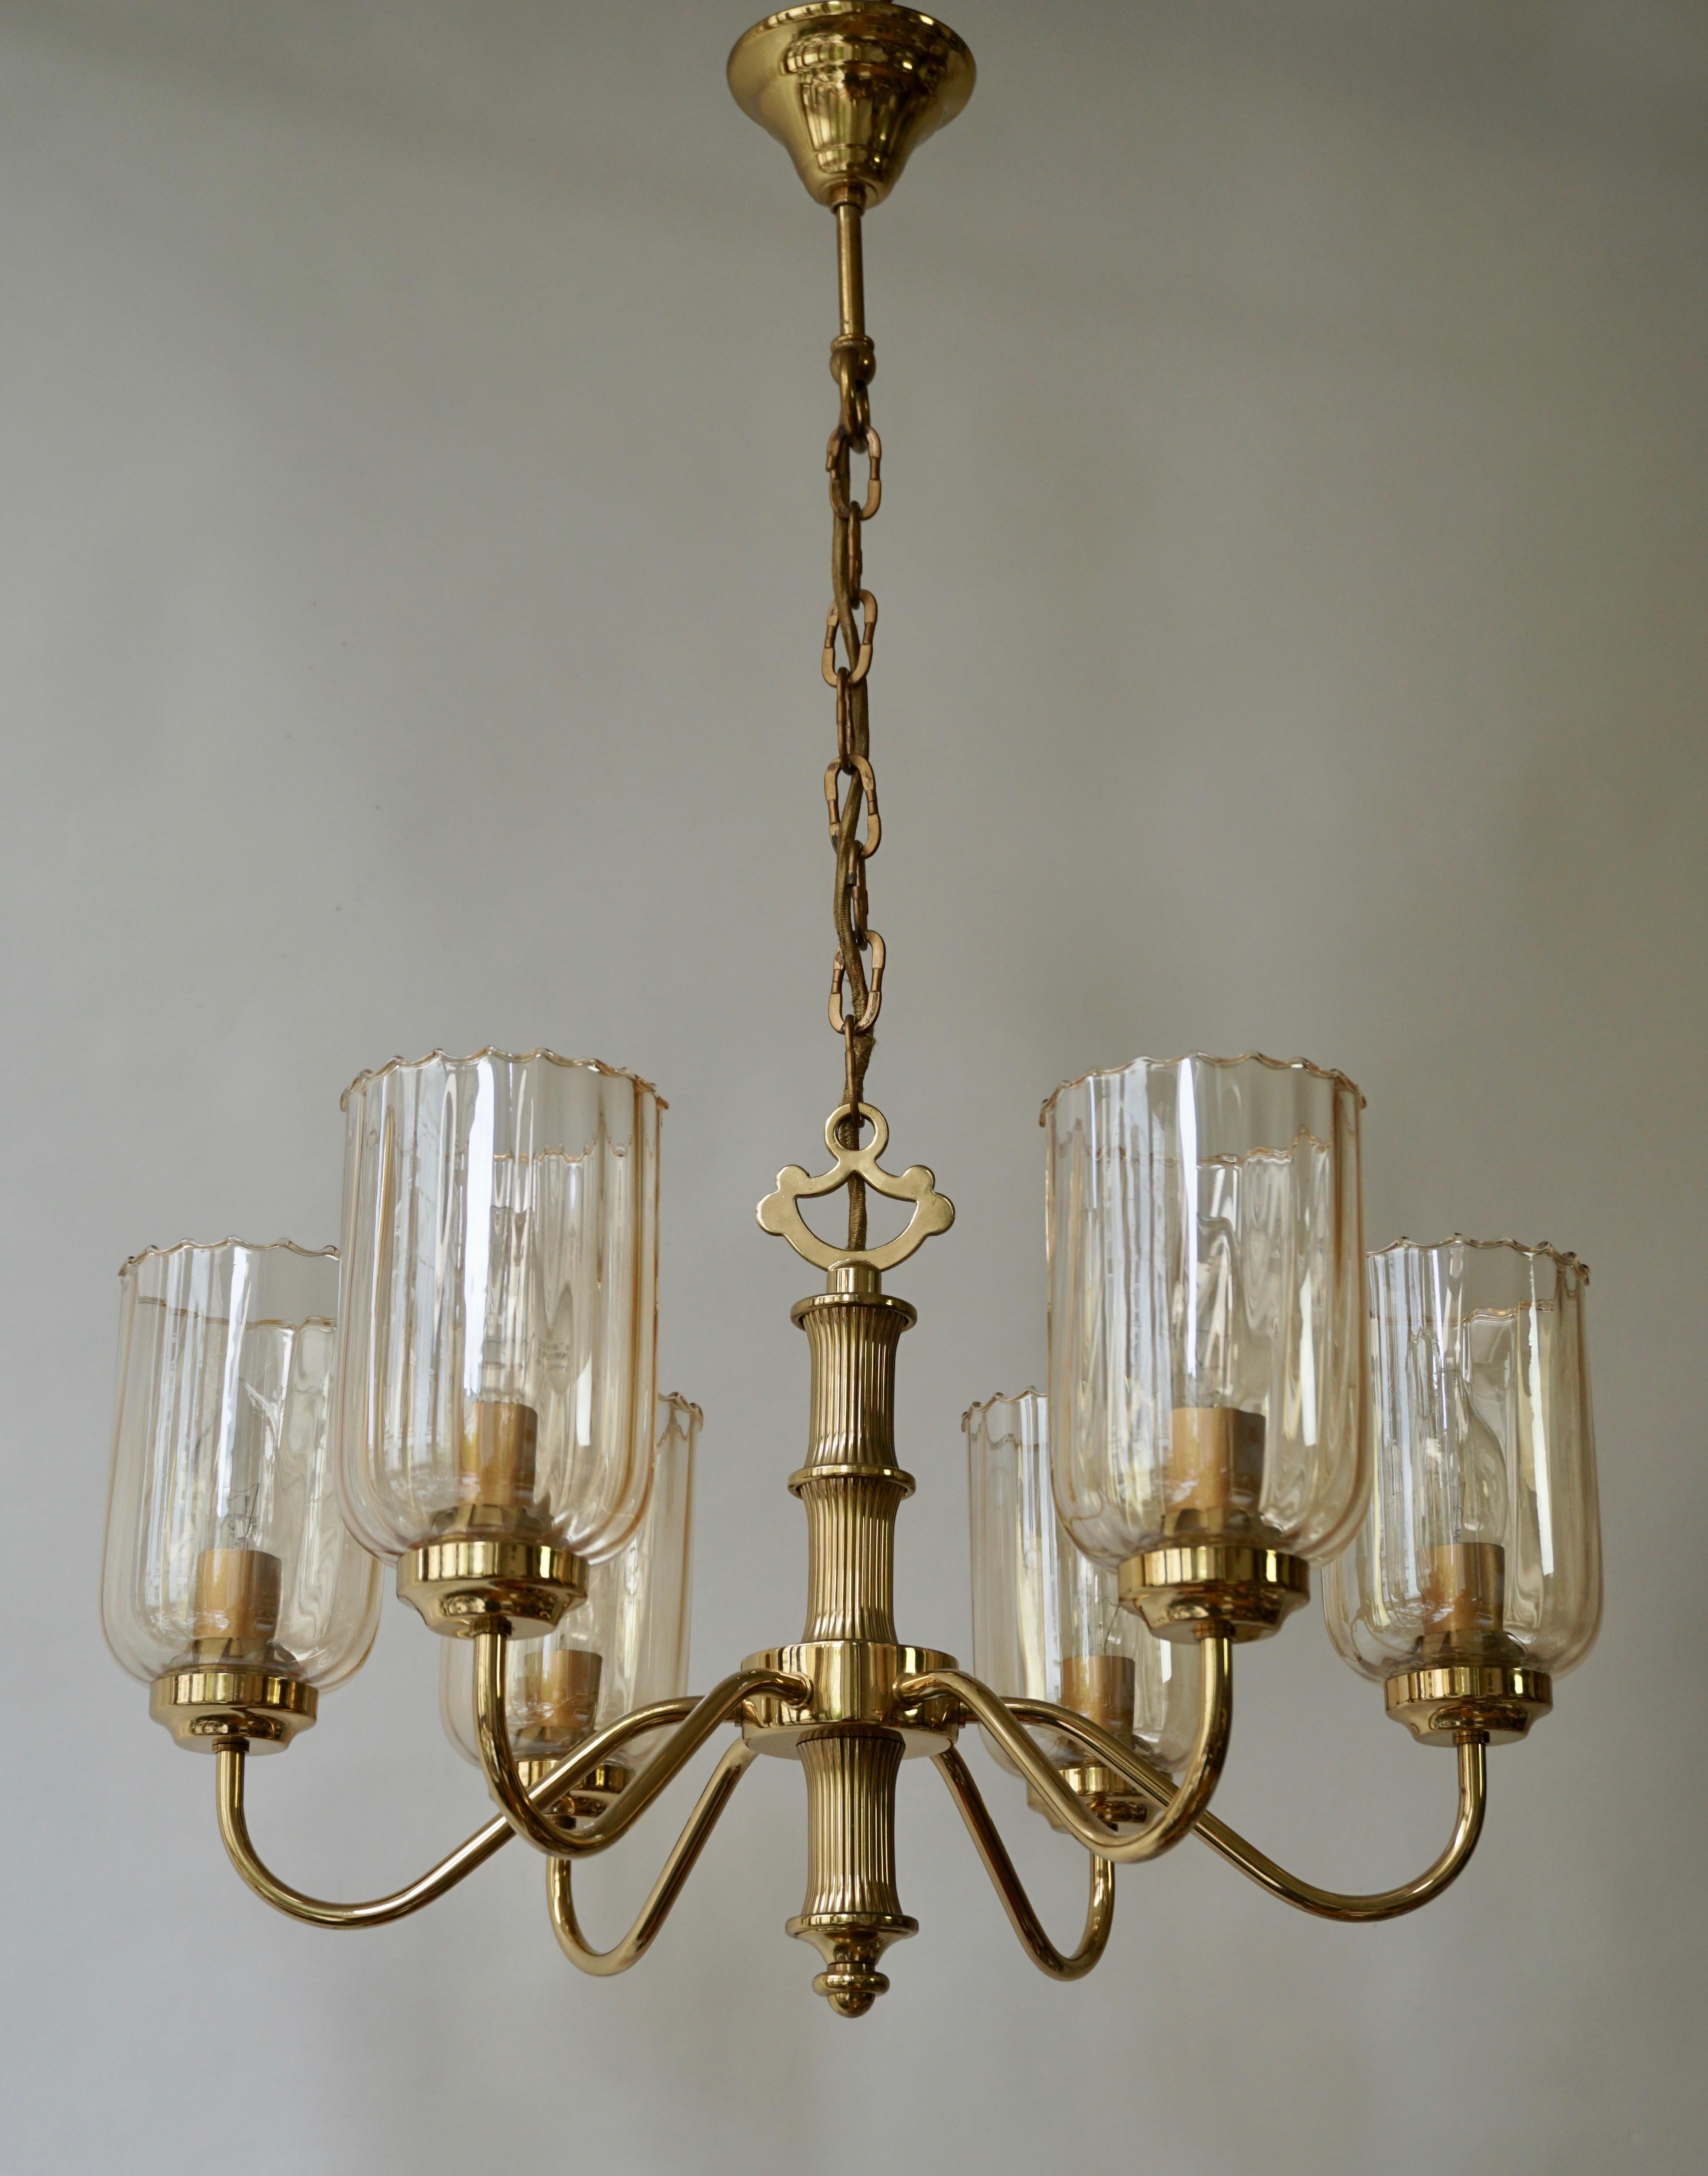 Murano glass and brass chandelier.
Measures: Diameter 52 cm.
Height fixture 32 cm.
Total height 75 cm.
Five E14 bulbs.